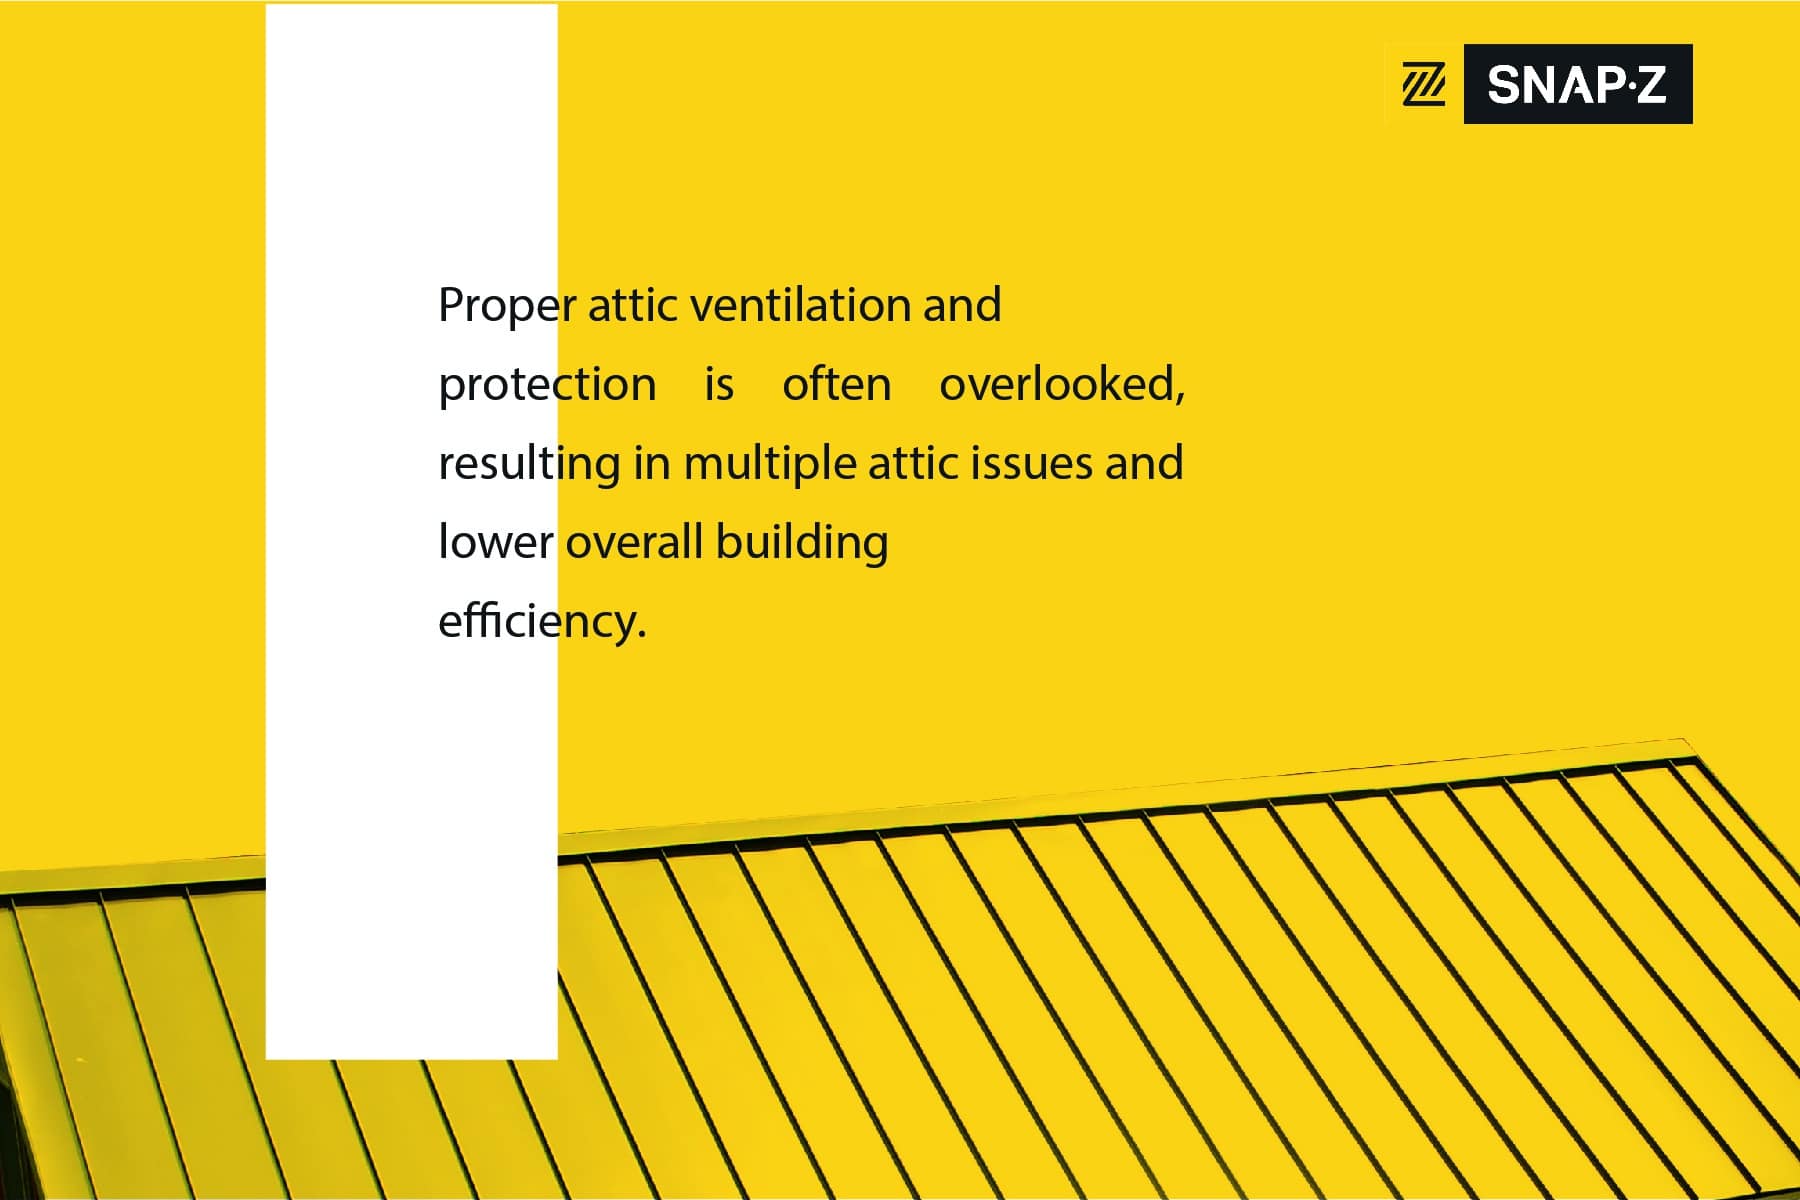 improper attic ventilation results in lower building efficiency